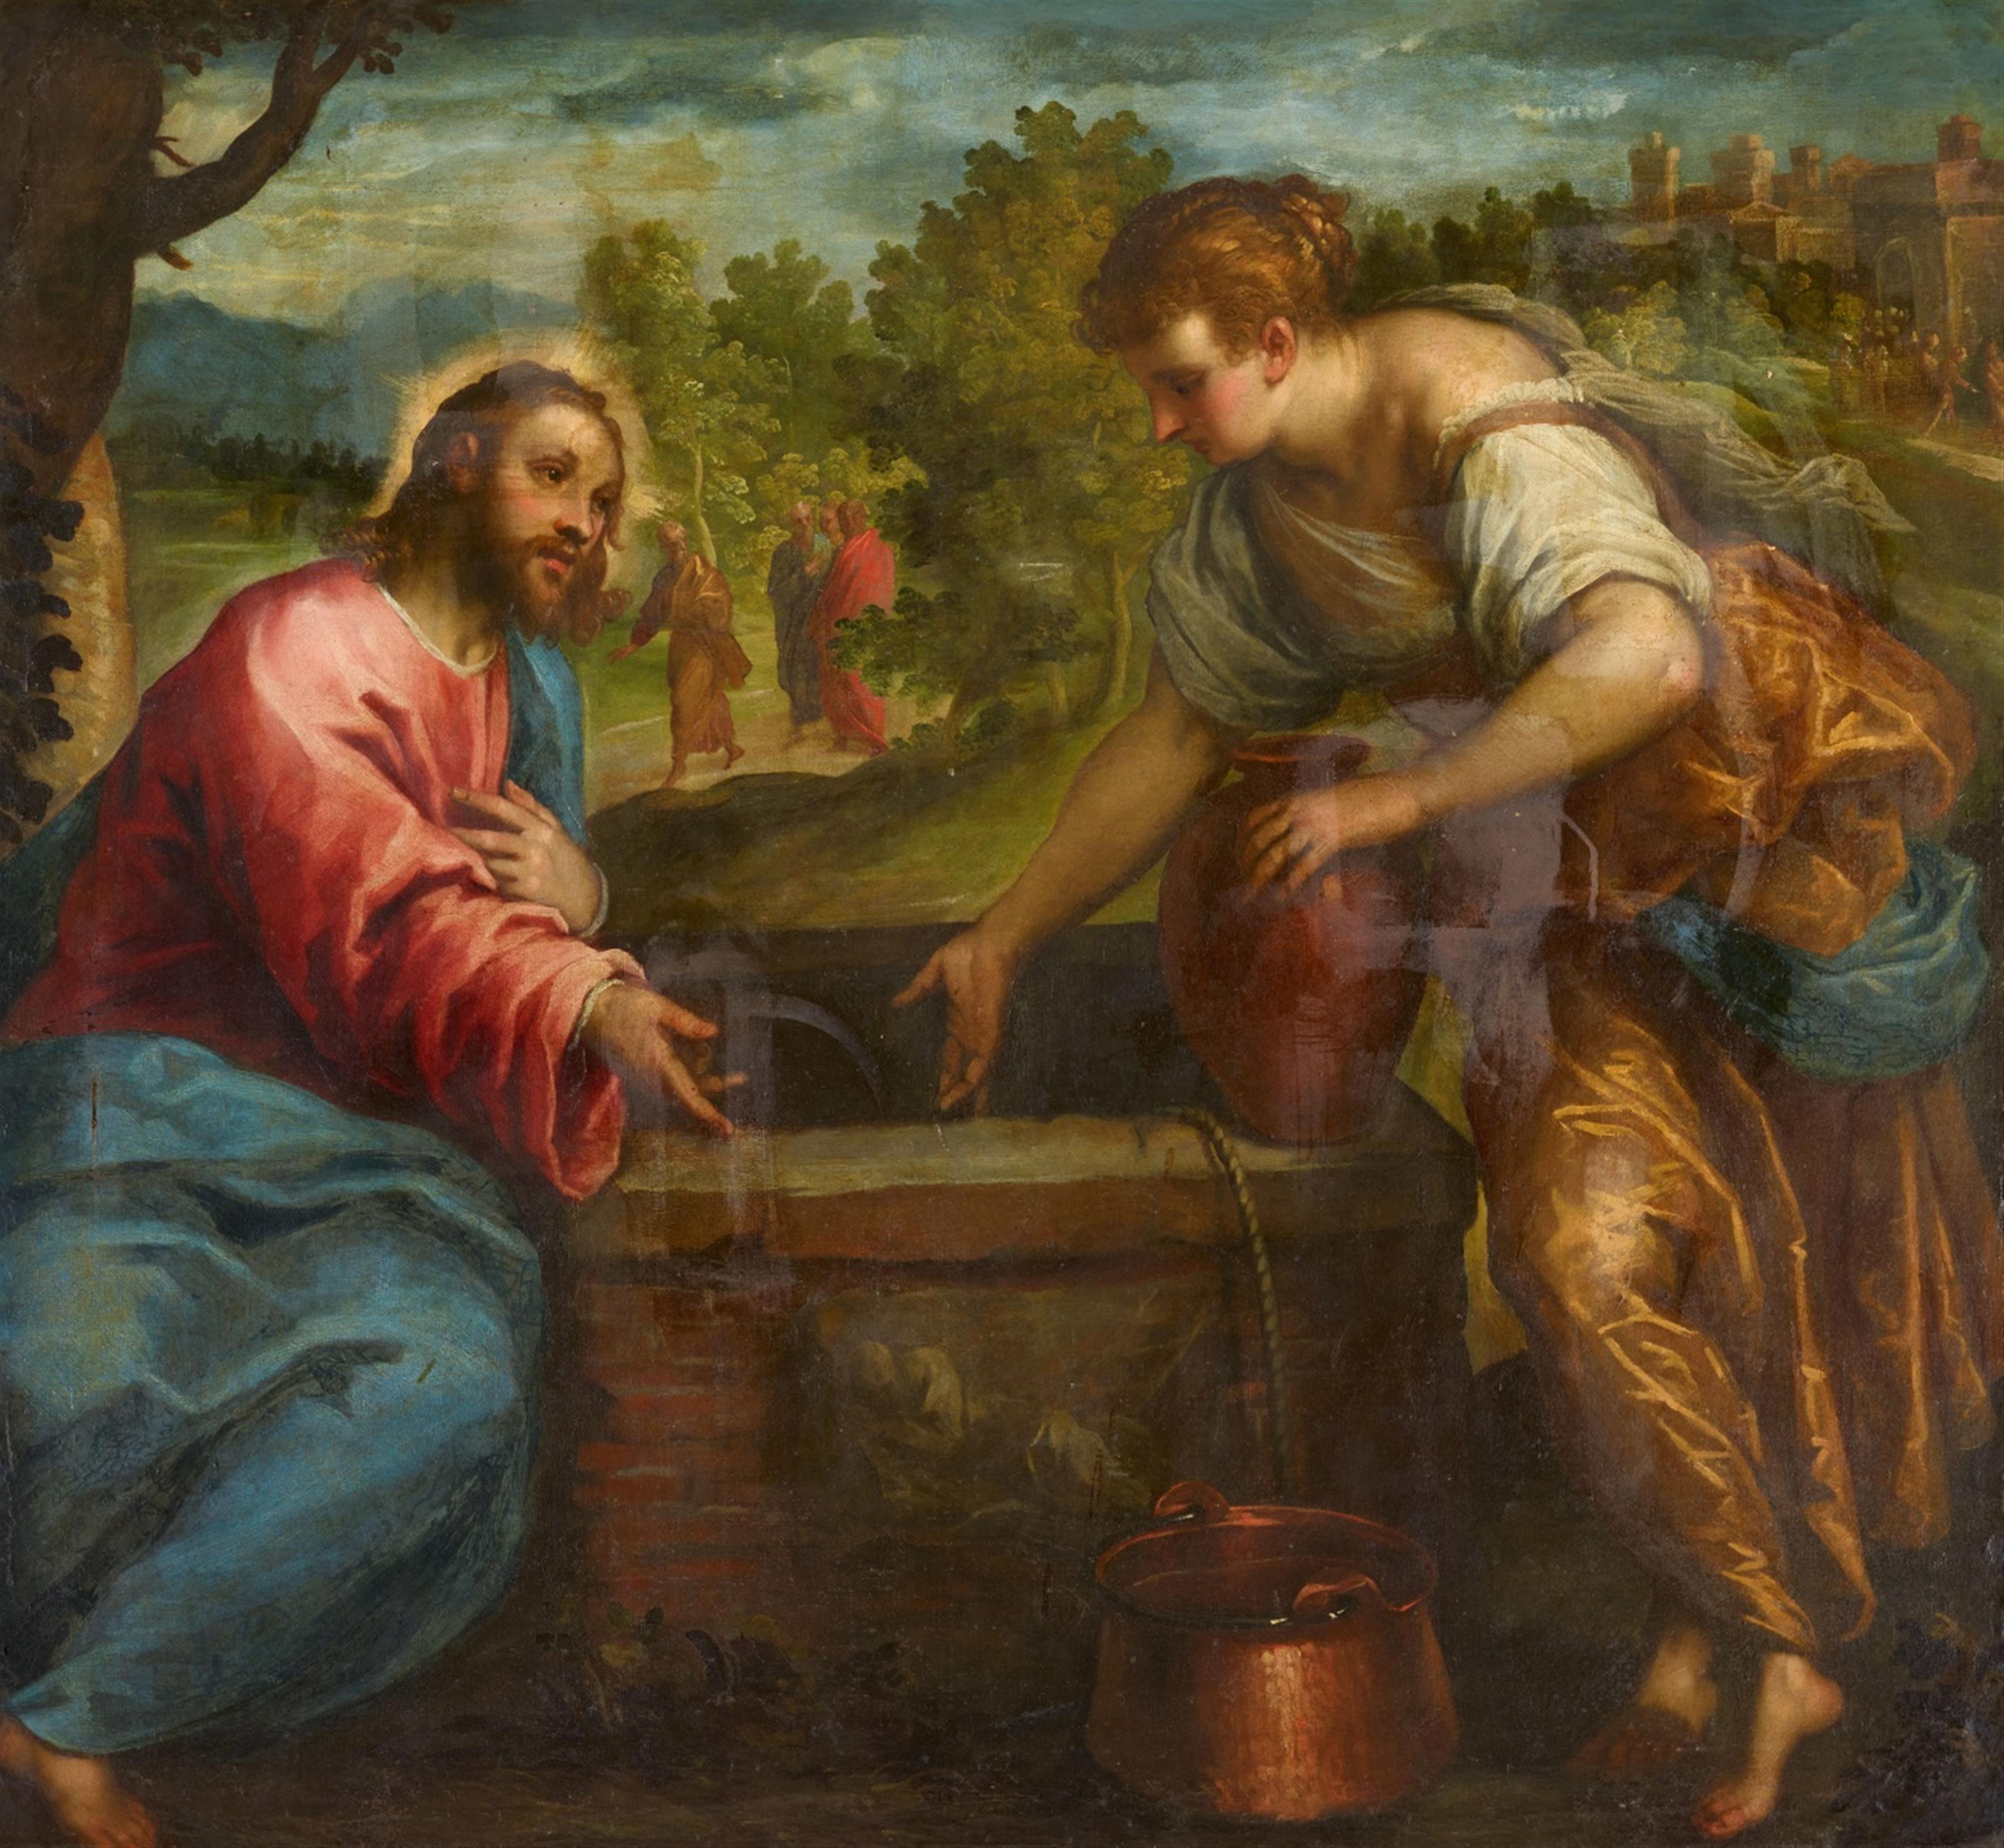 Paolo Caliari, called Veronese, circle of - Christ and the Samaritan Woman - image-1